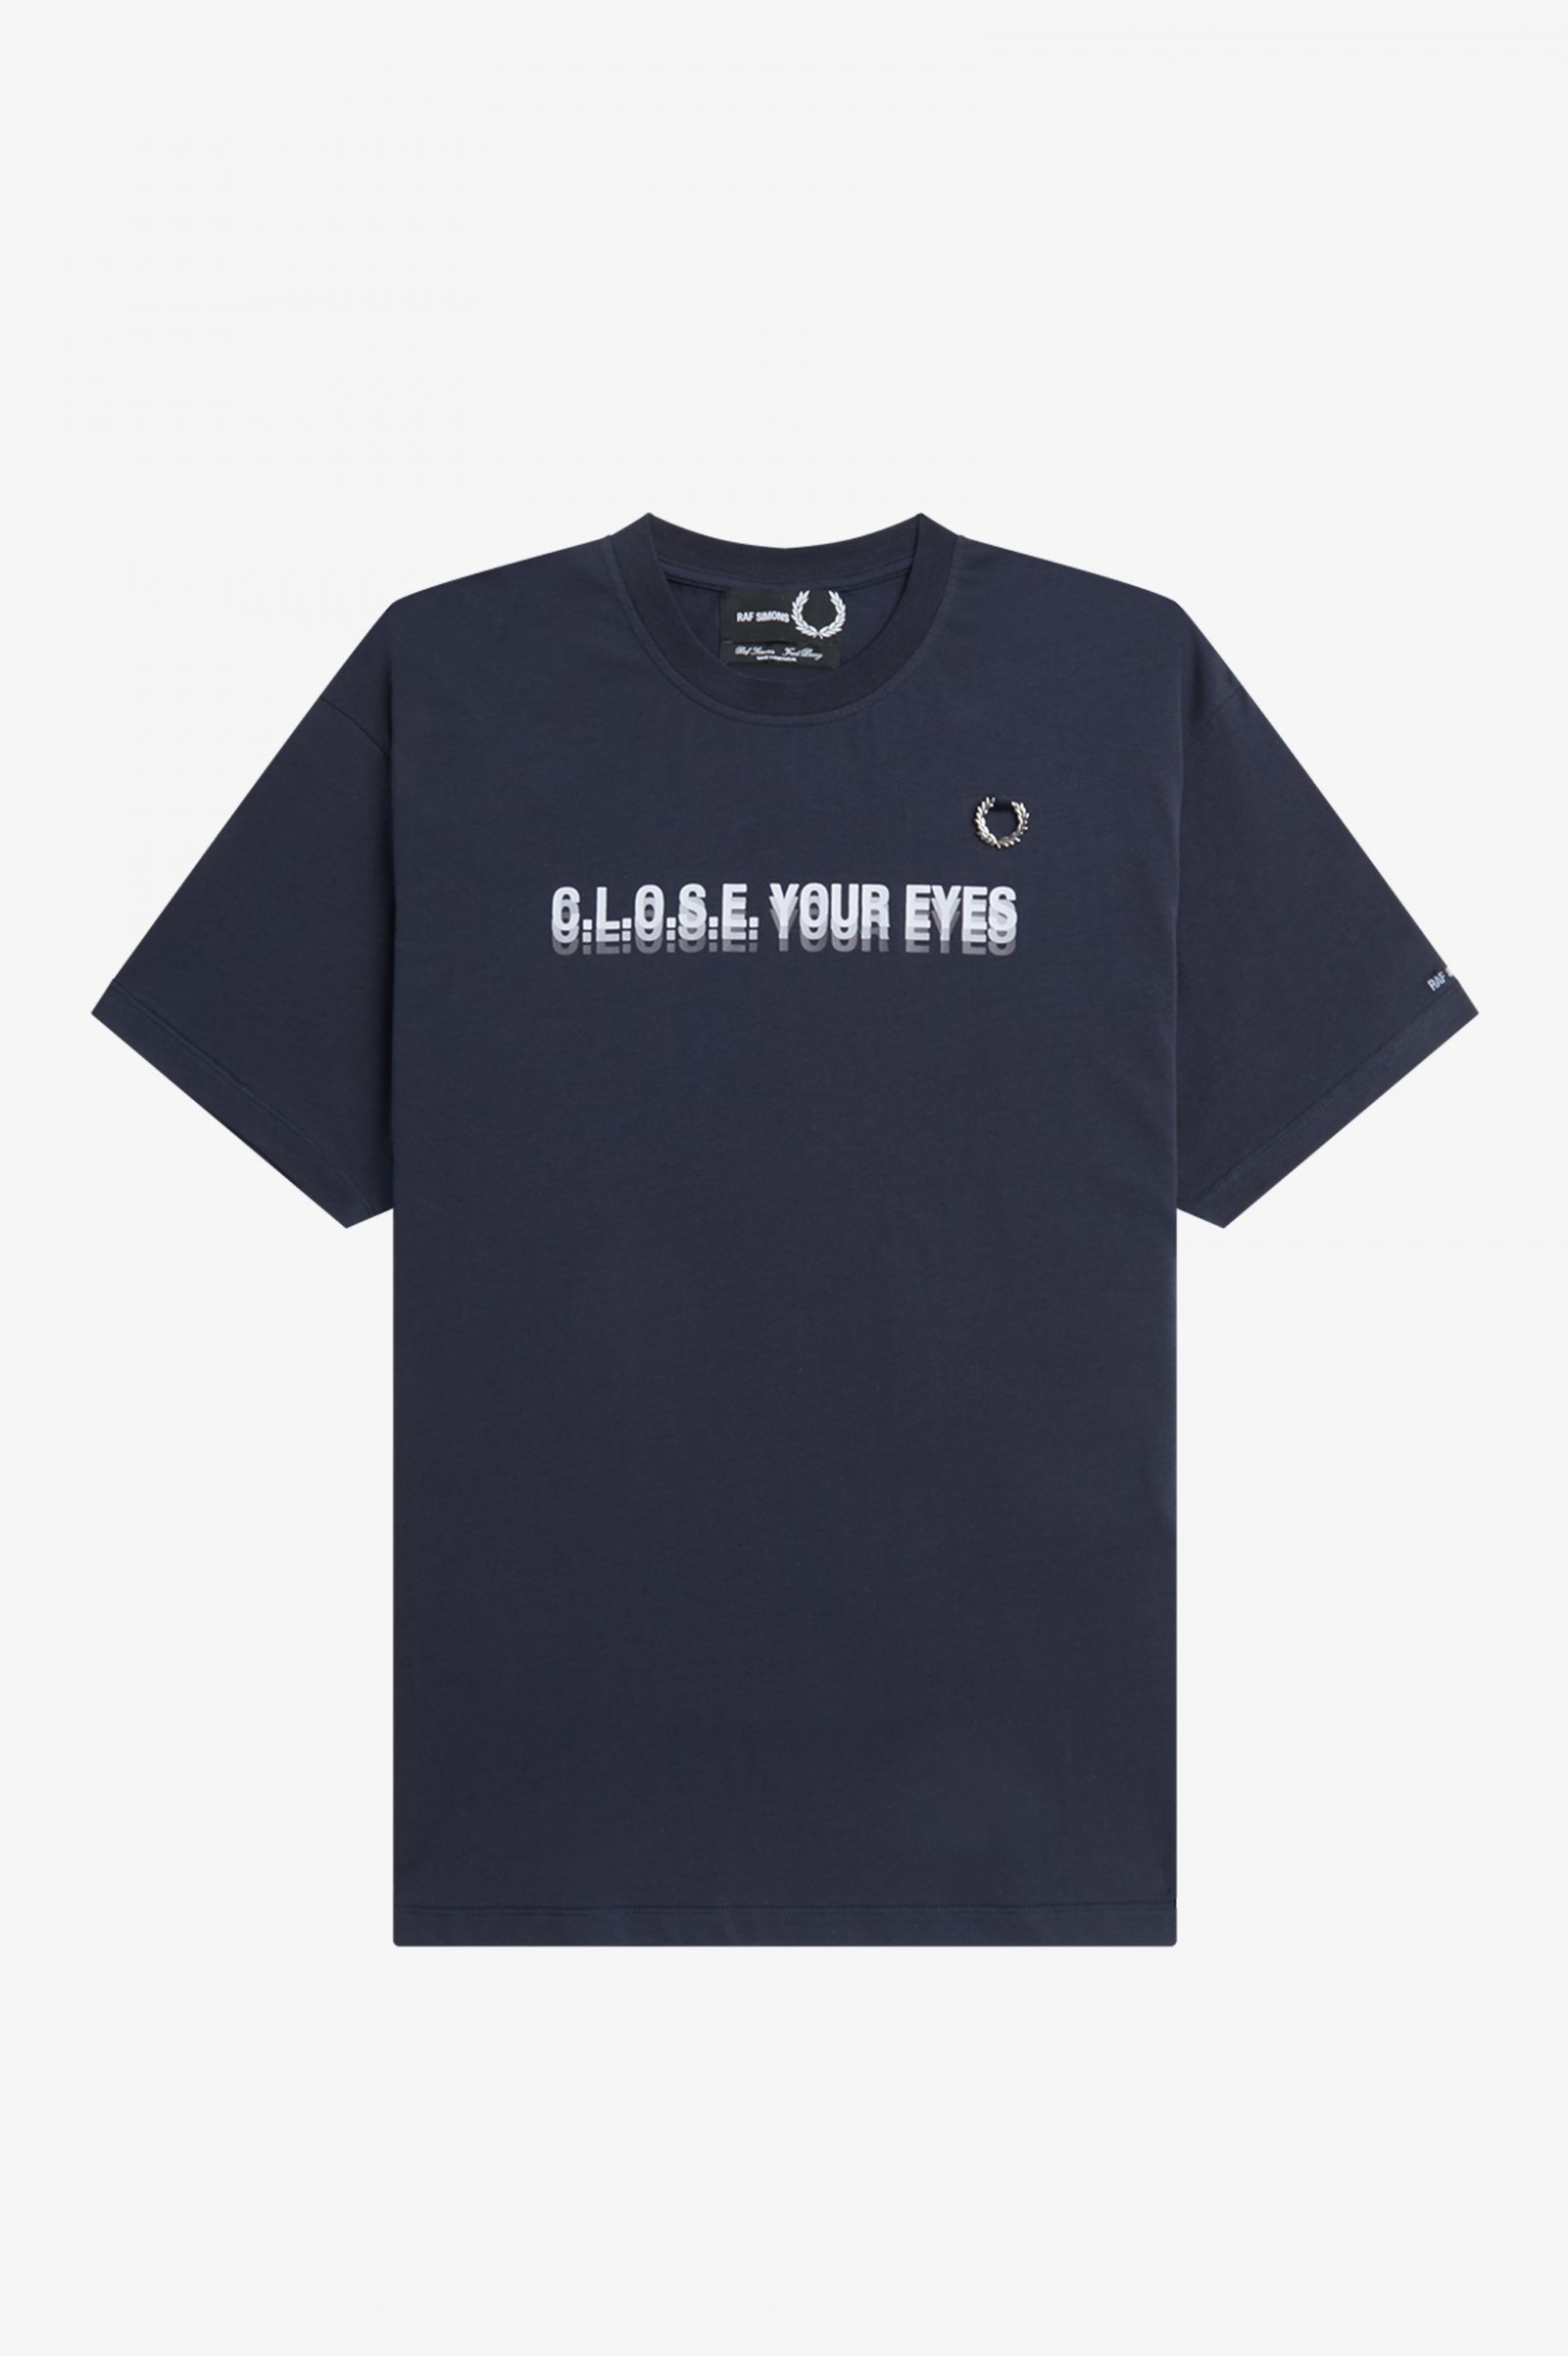 Printed T-Shirt - Navy Blue | Raf Simmons | Polo Shirts